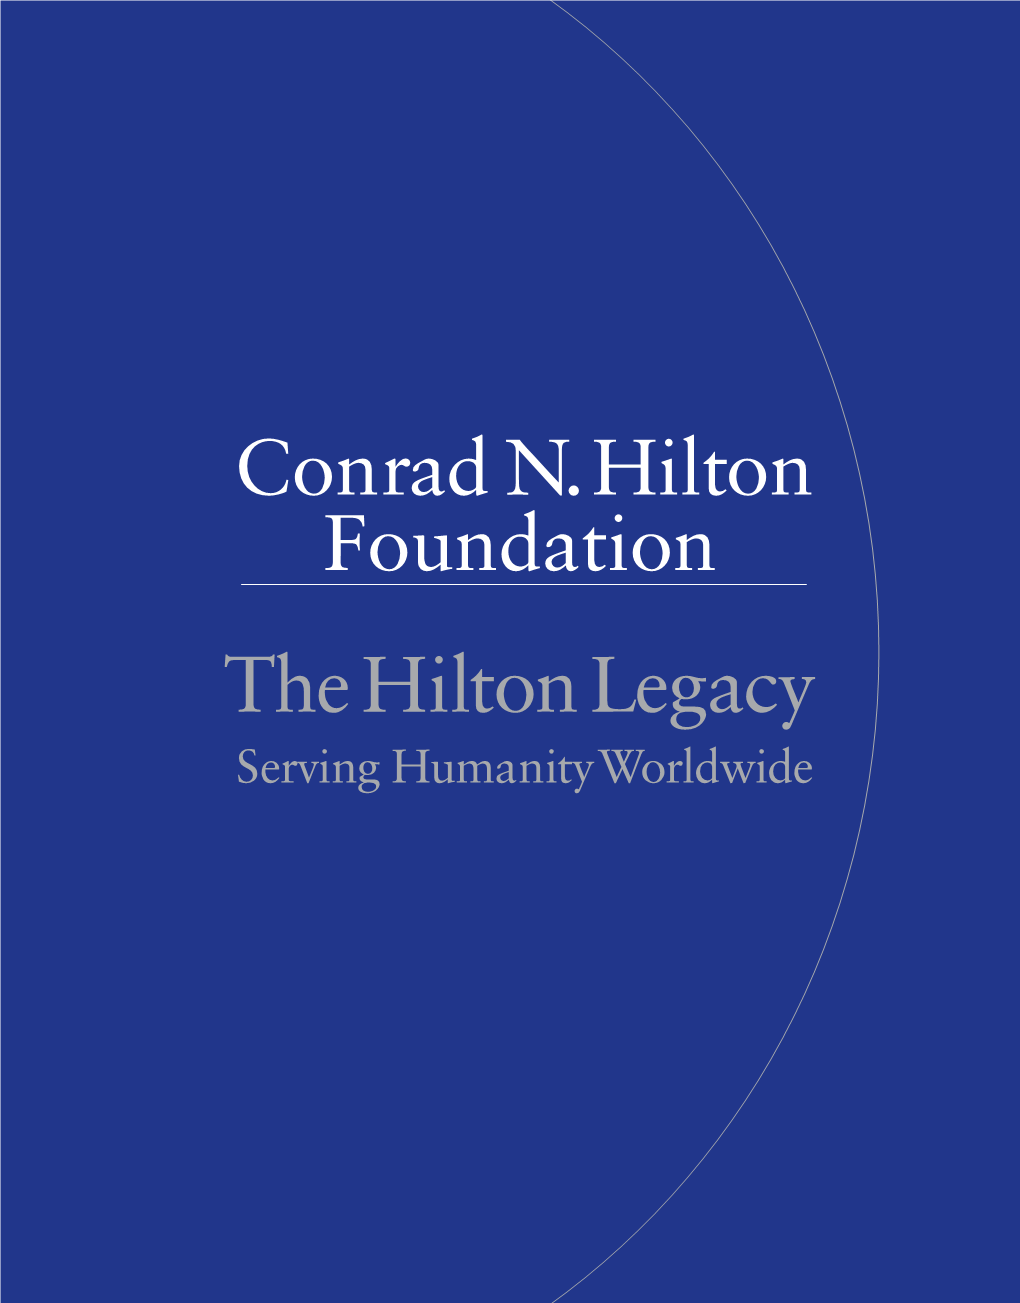 Book the Hilton Legacy